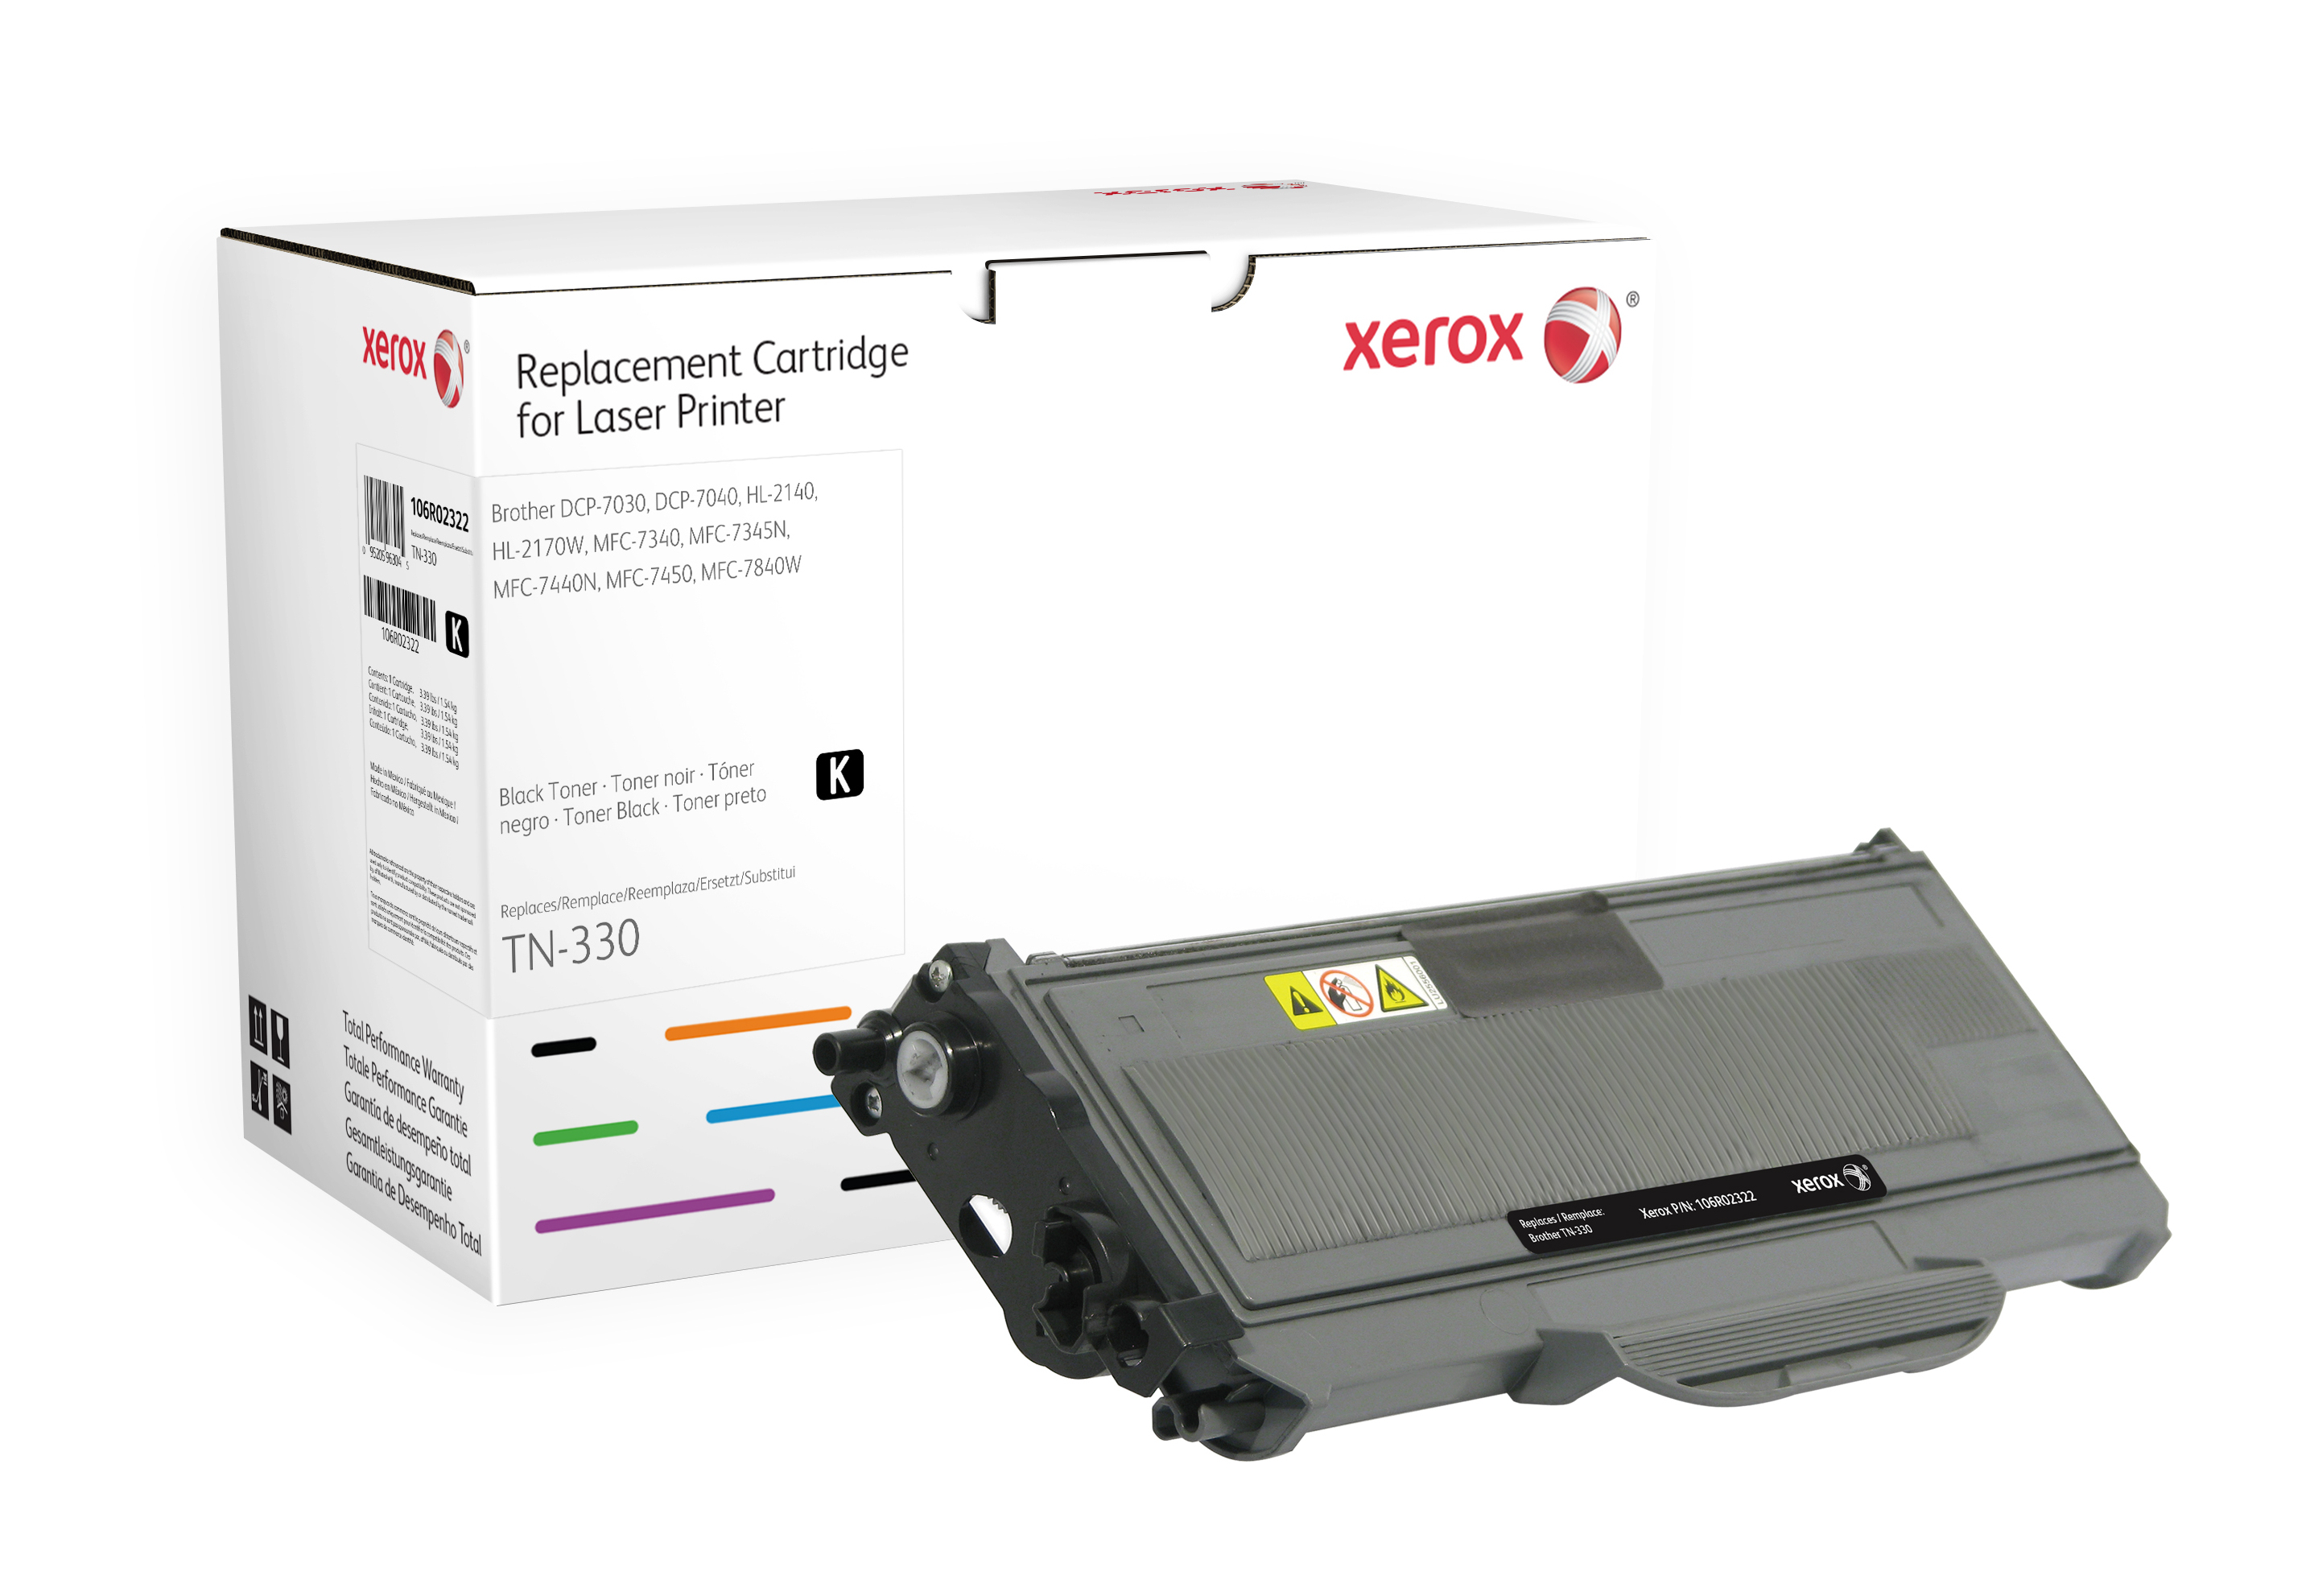 Xerox Brother DCP-7030/7040/7045W